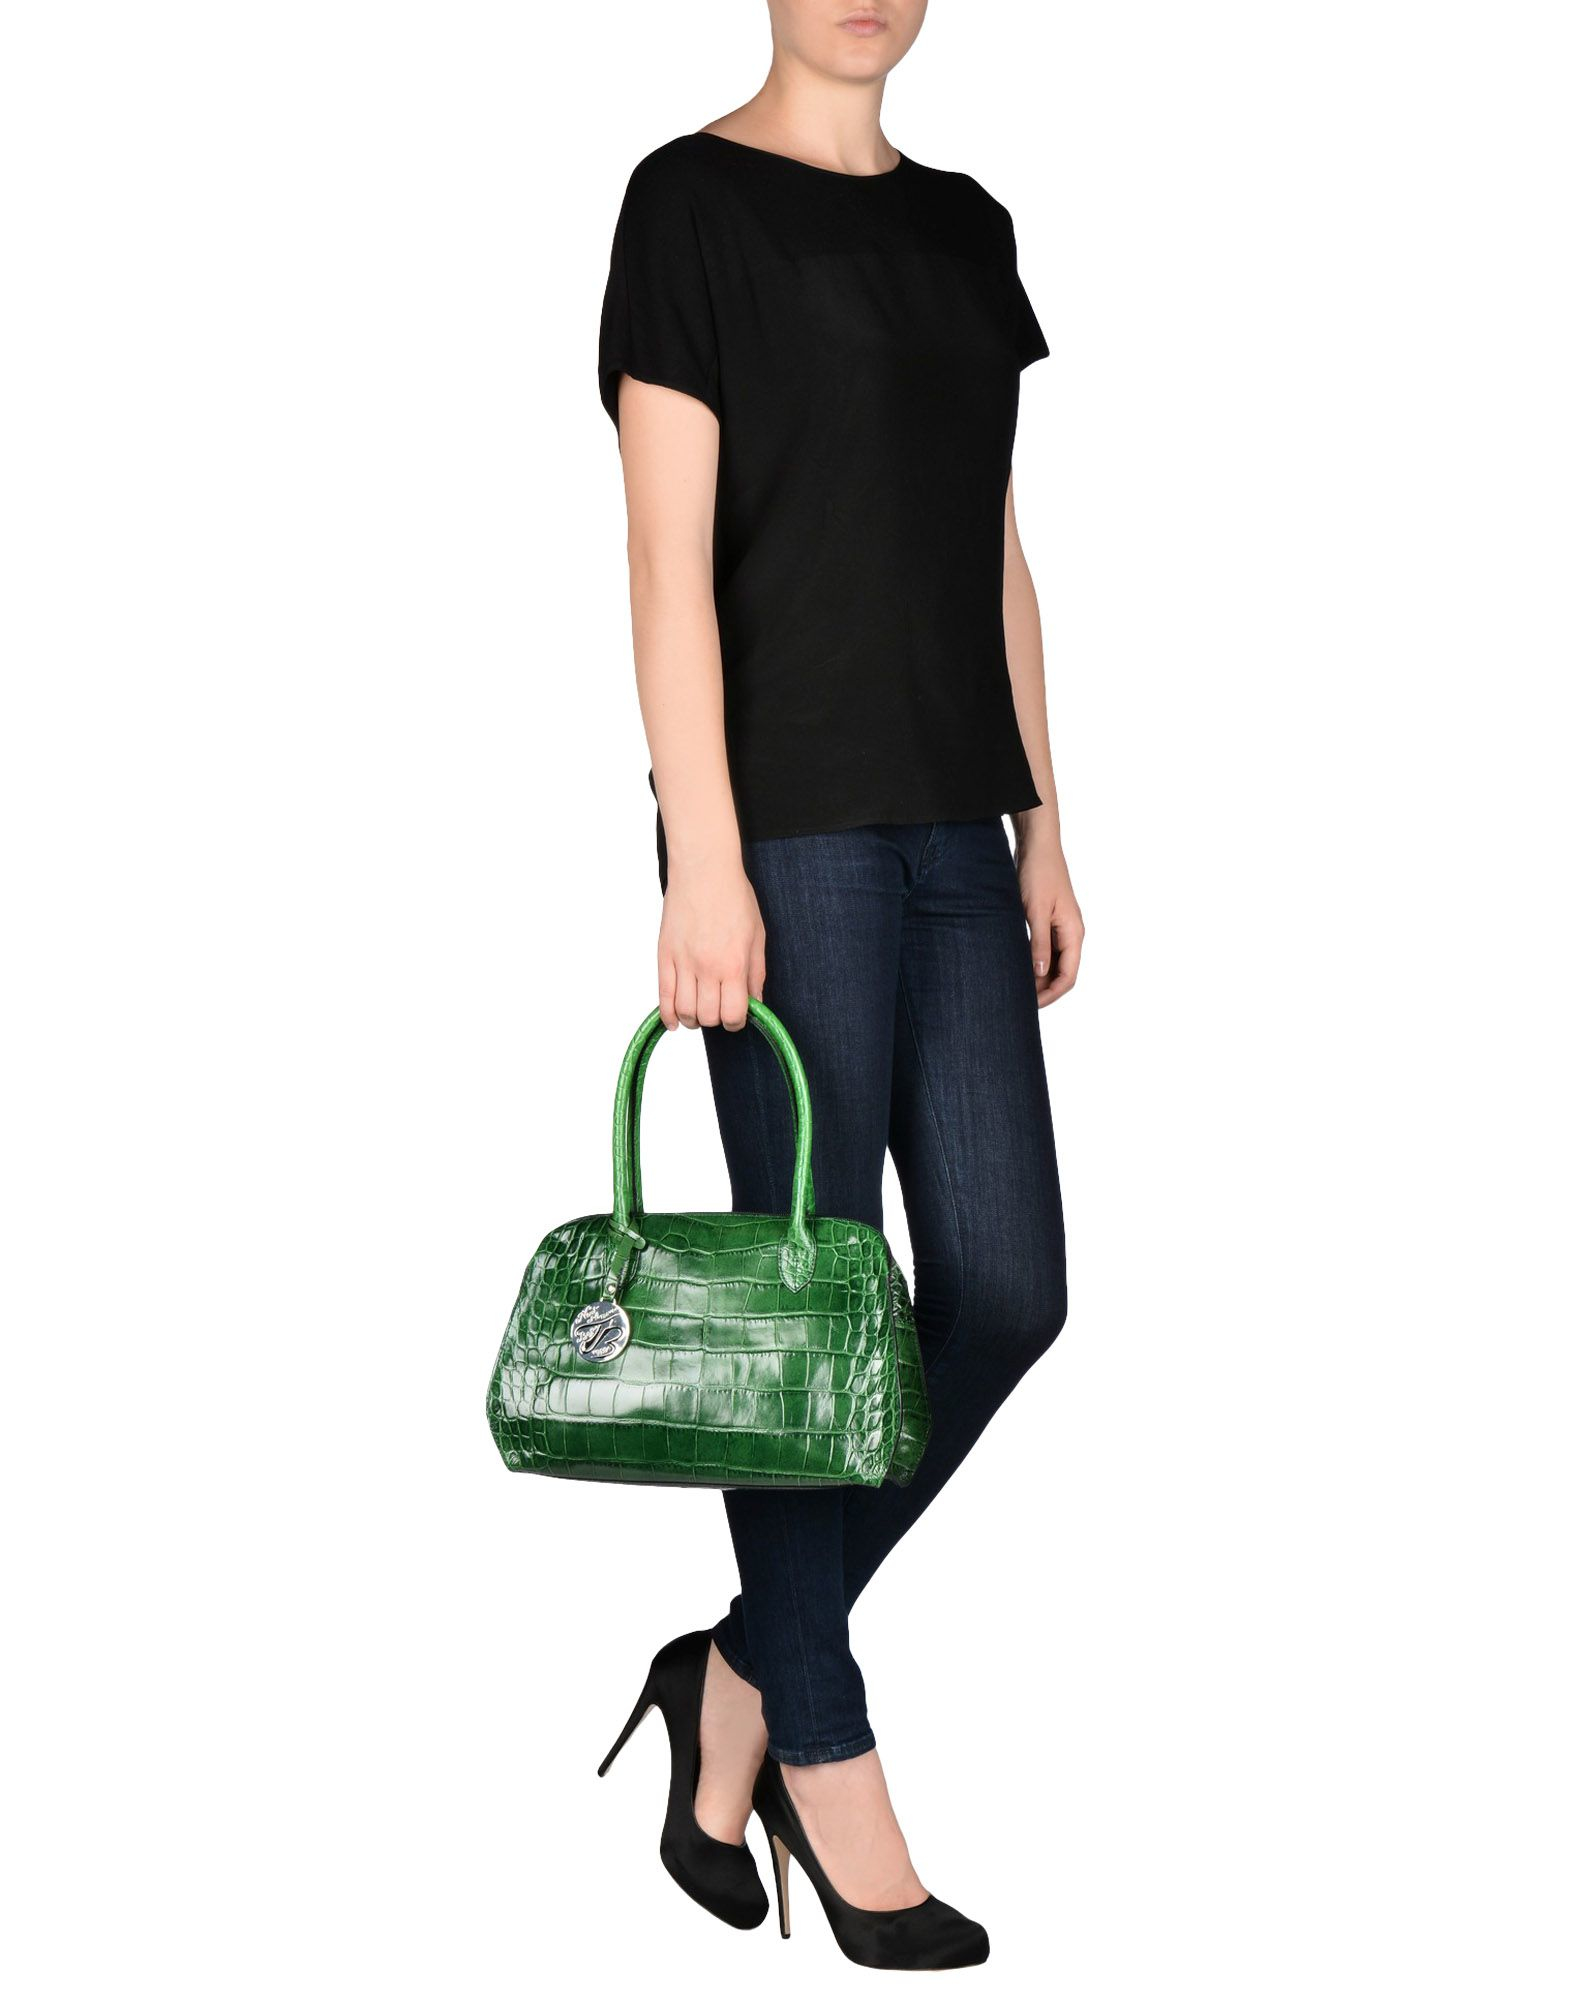  Tosca  Blu Handbag in Green  Lyst